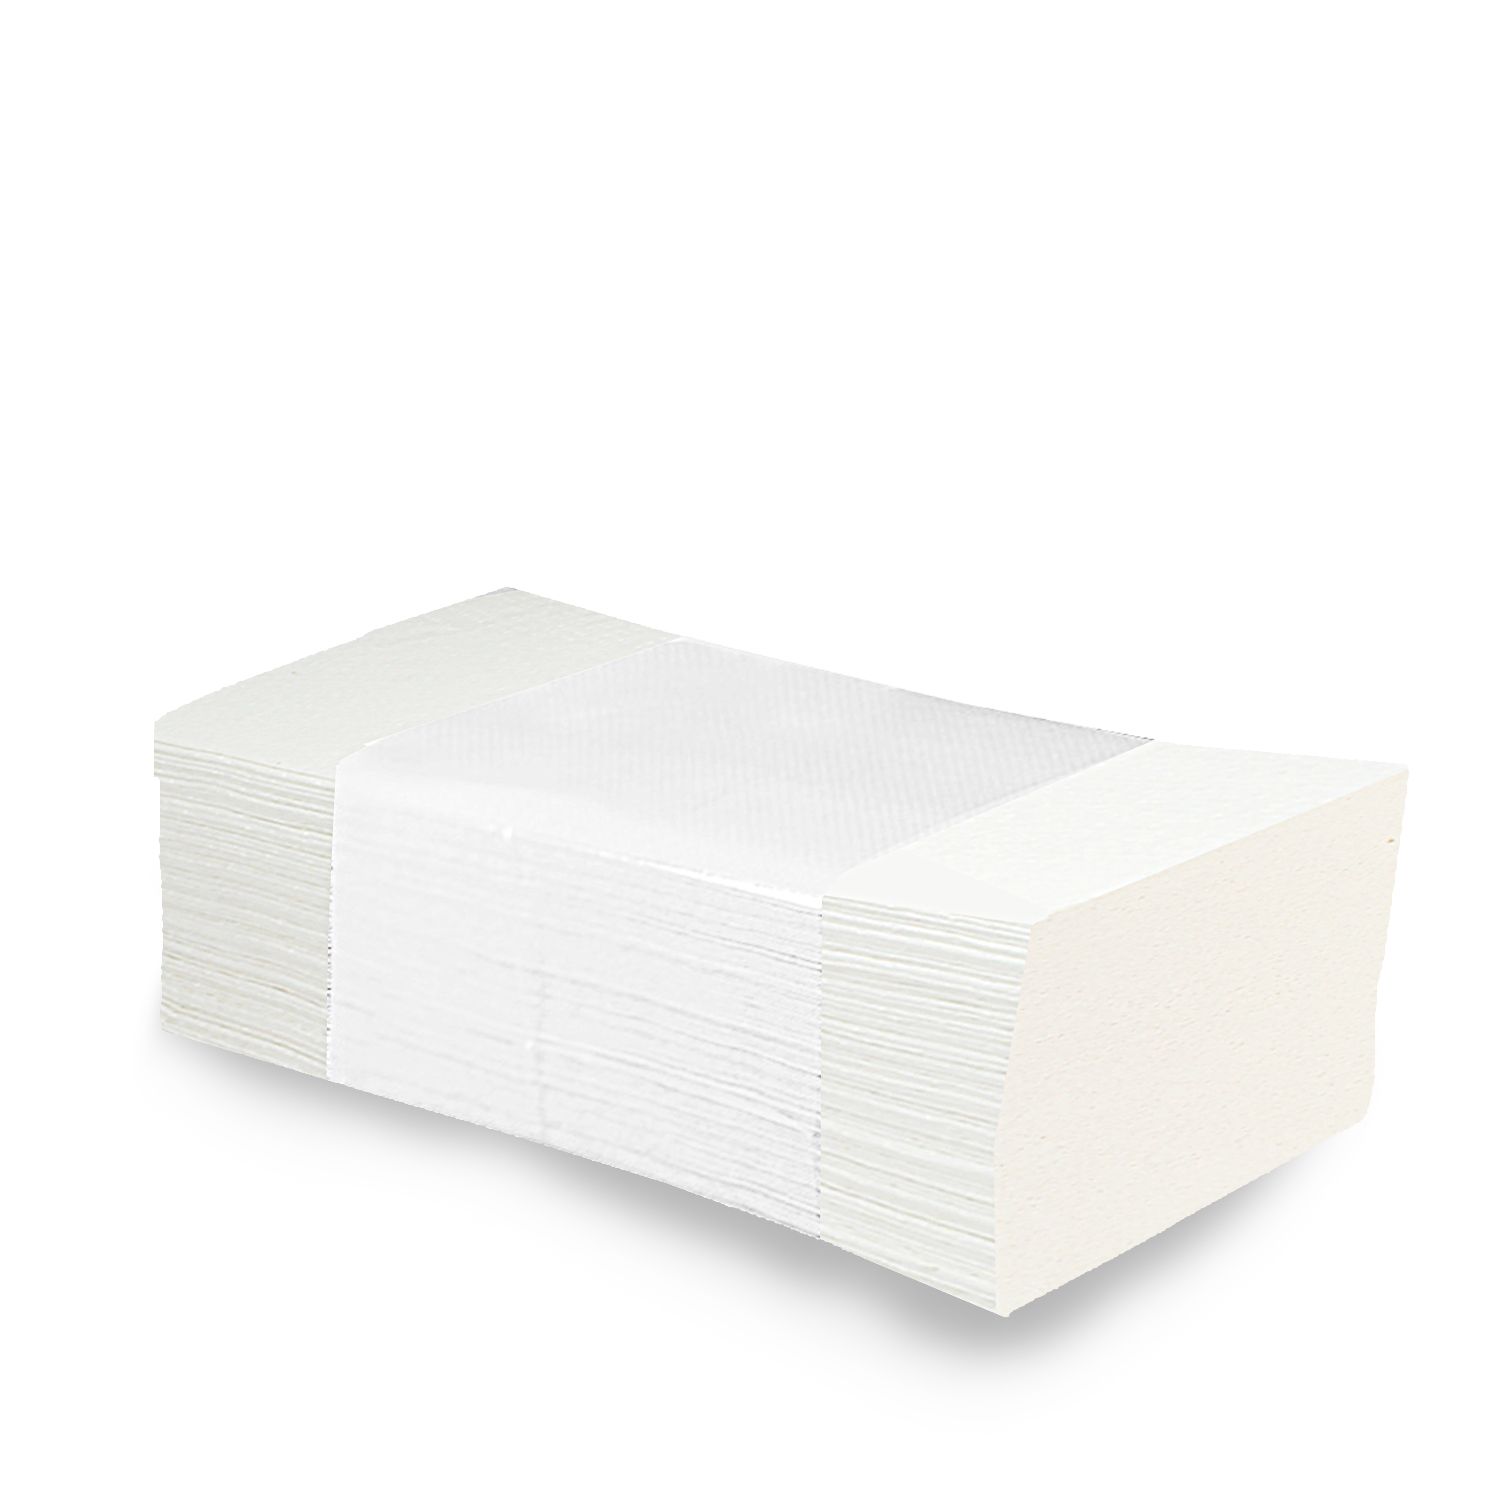 Papier-Falthandtuch (FSC Mix) gefaltet ZZ 2-lagig weiß 25 x 21 cm - 3200 Stück